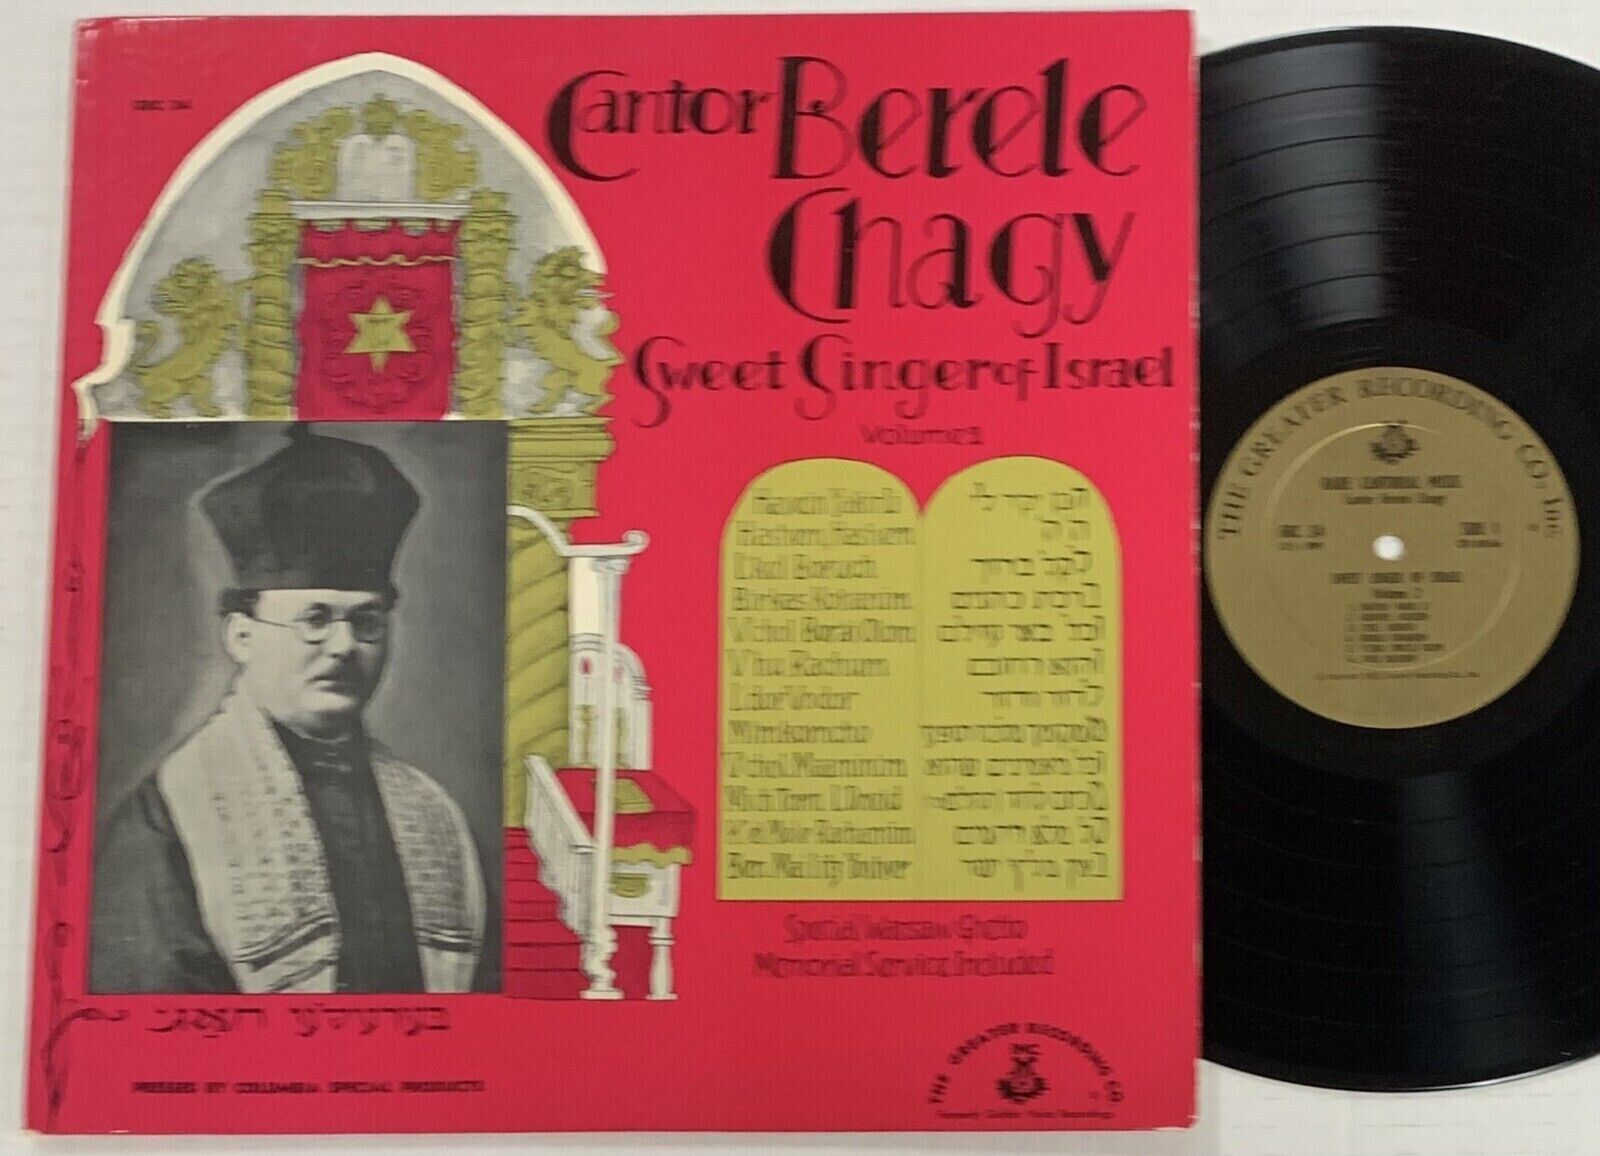 Cantor Berele Chagy Sweet Singer of Israel Volume 2 Greater Recording LP #JA04